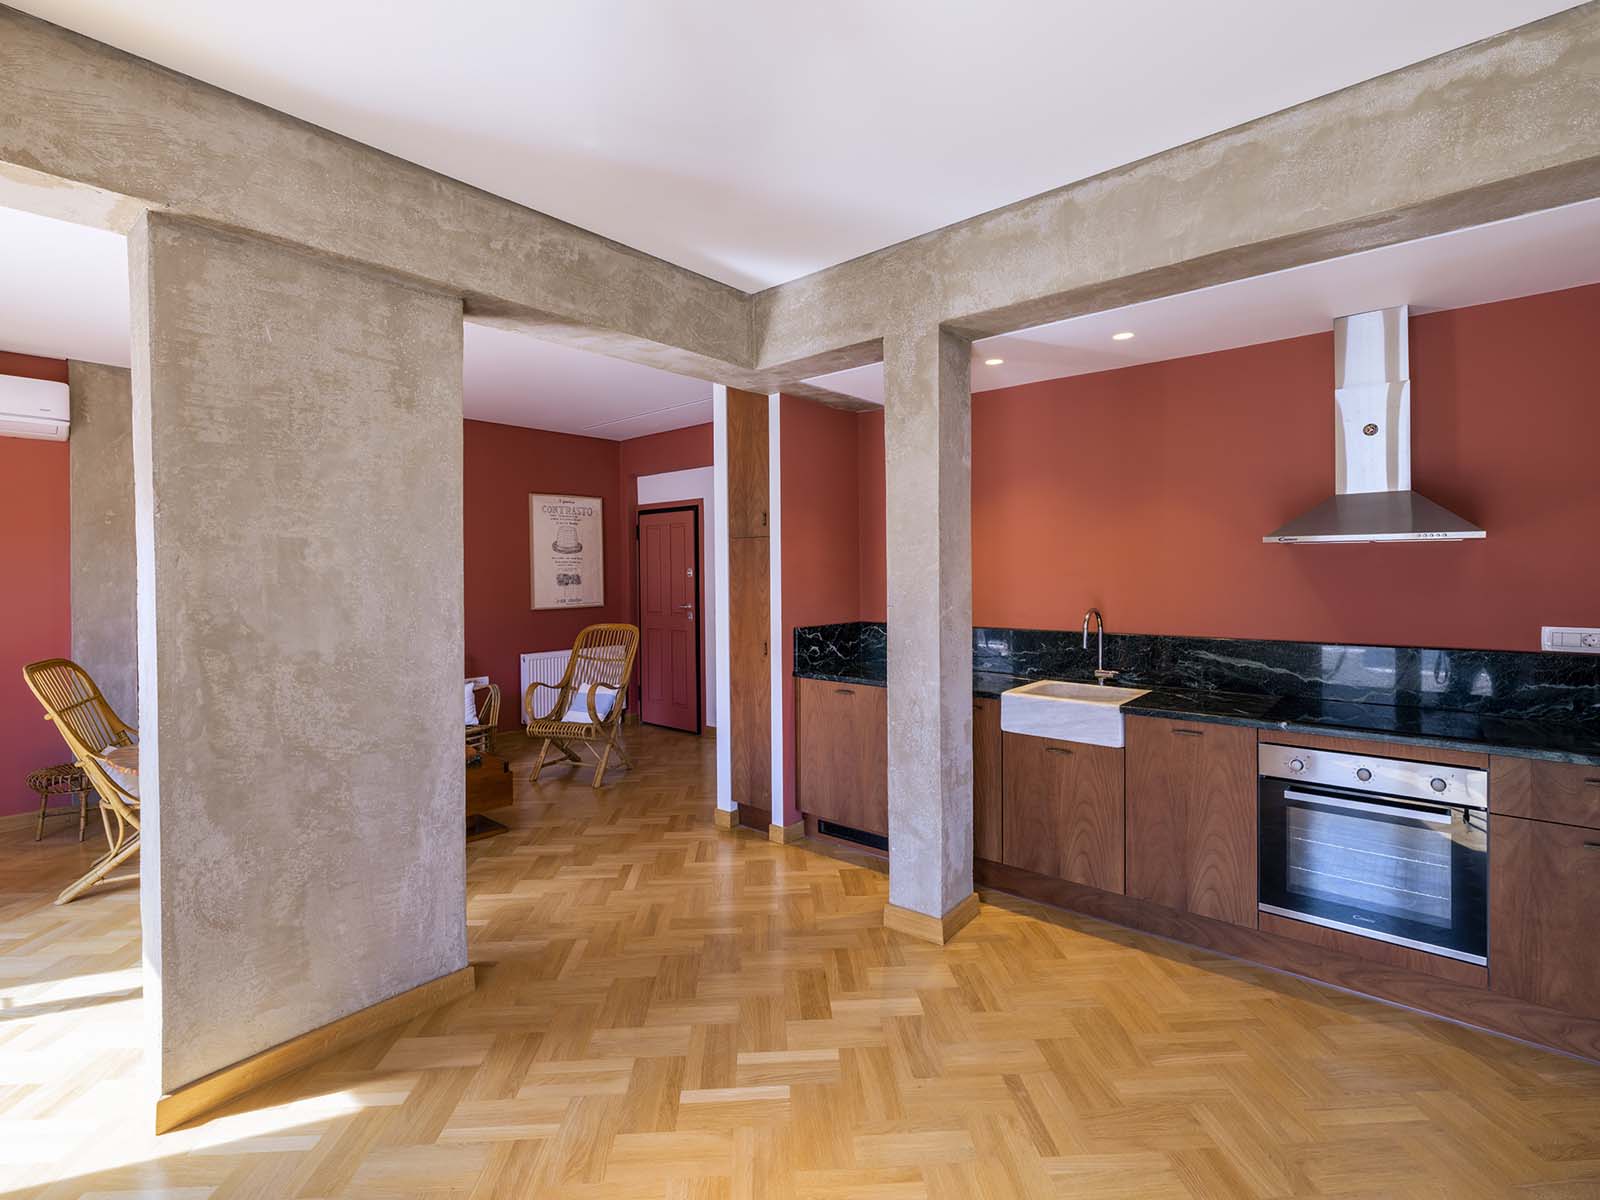 Archisearch 'The Italian Job' apartment renovation in Pagrati, Athens by Nefelia studio